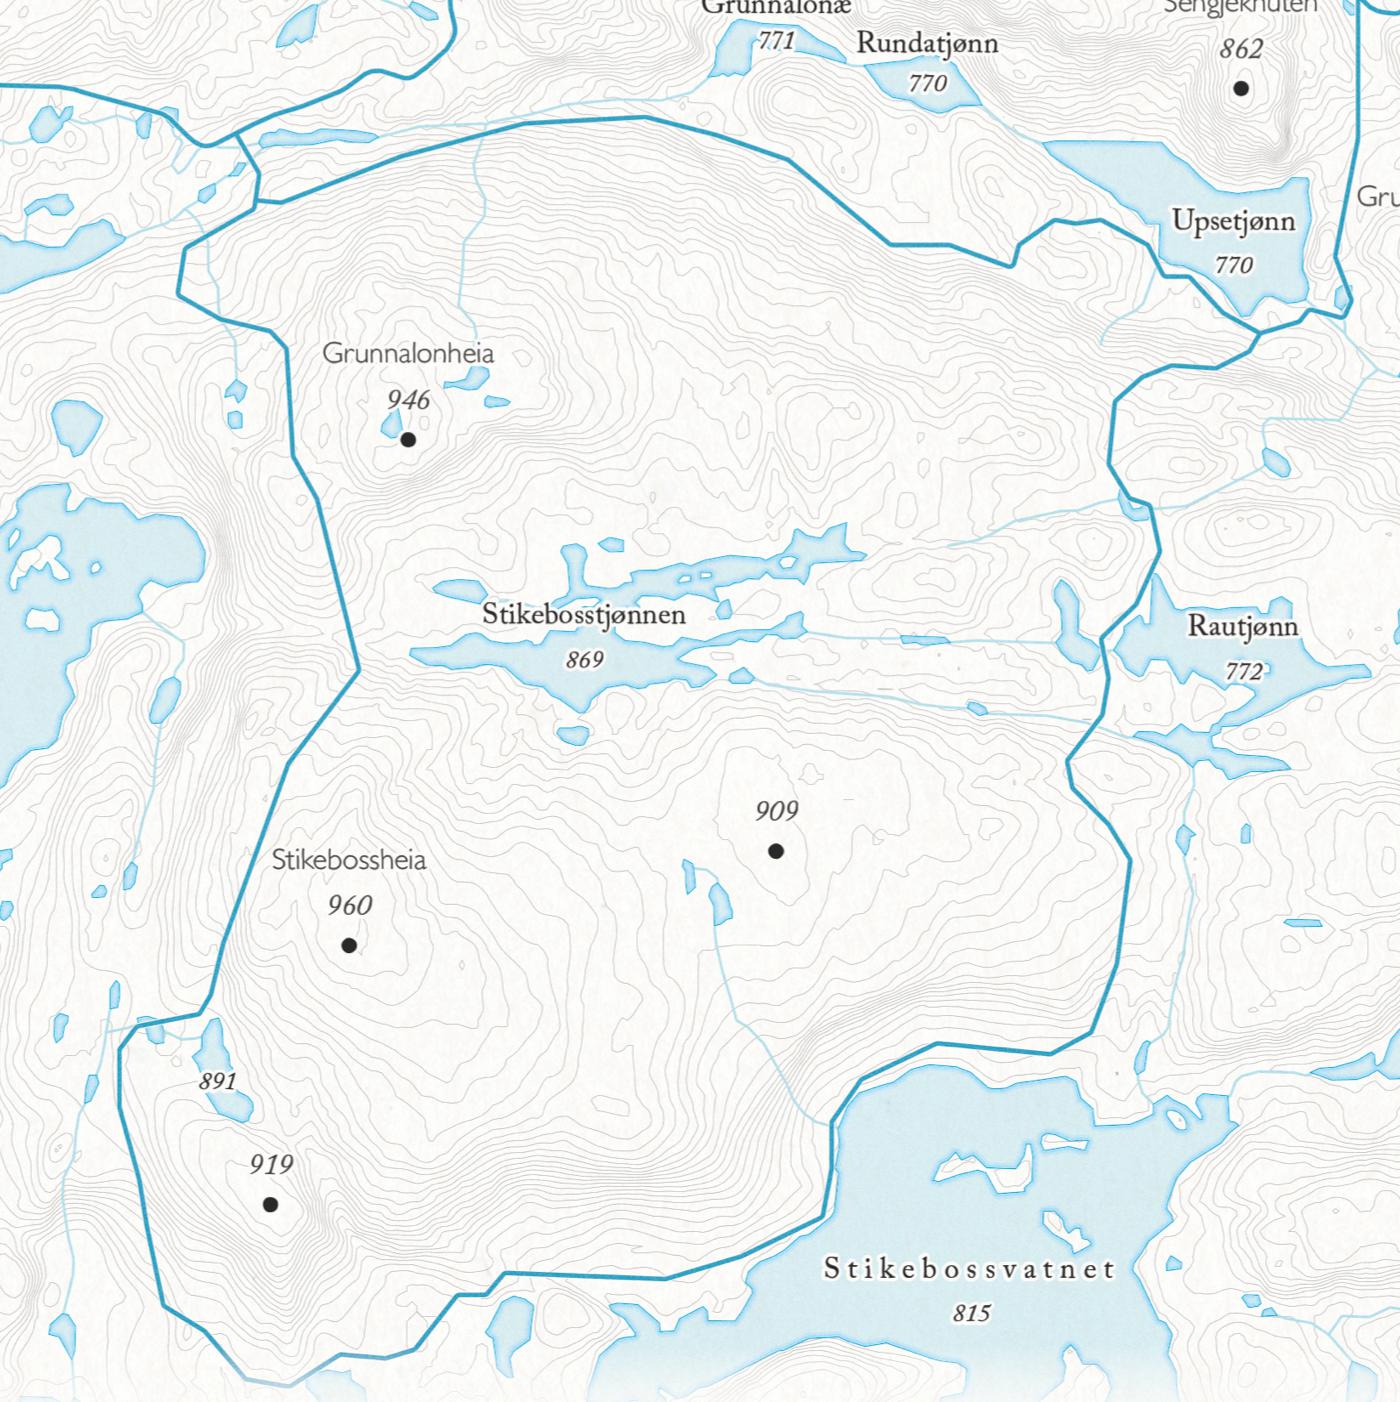 Skikart Ljosland (50x70 cm)-Maps-Dapamaps-Hyttefeber